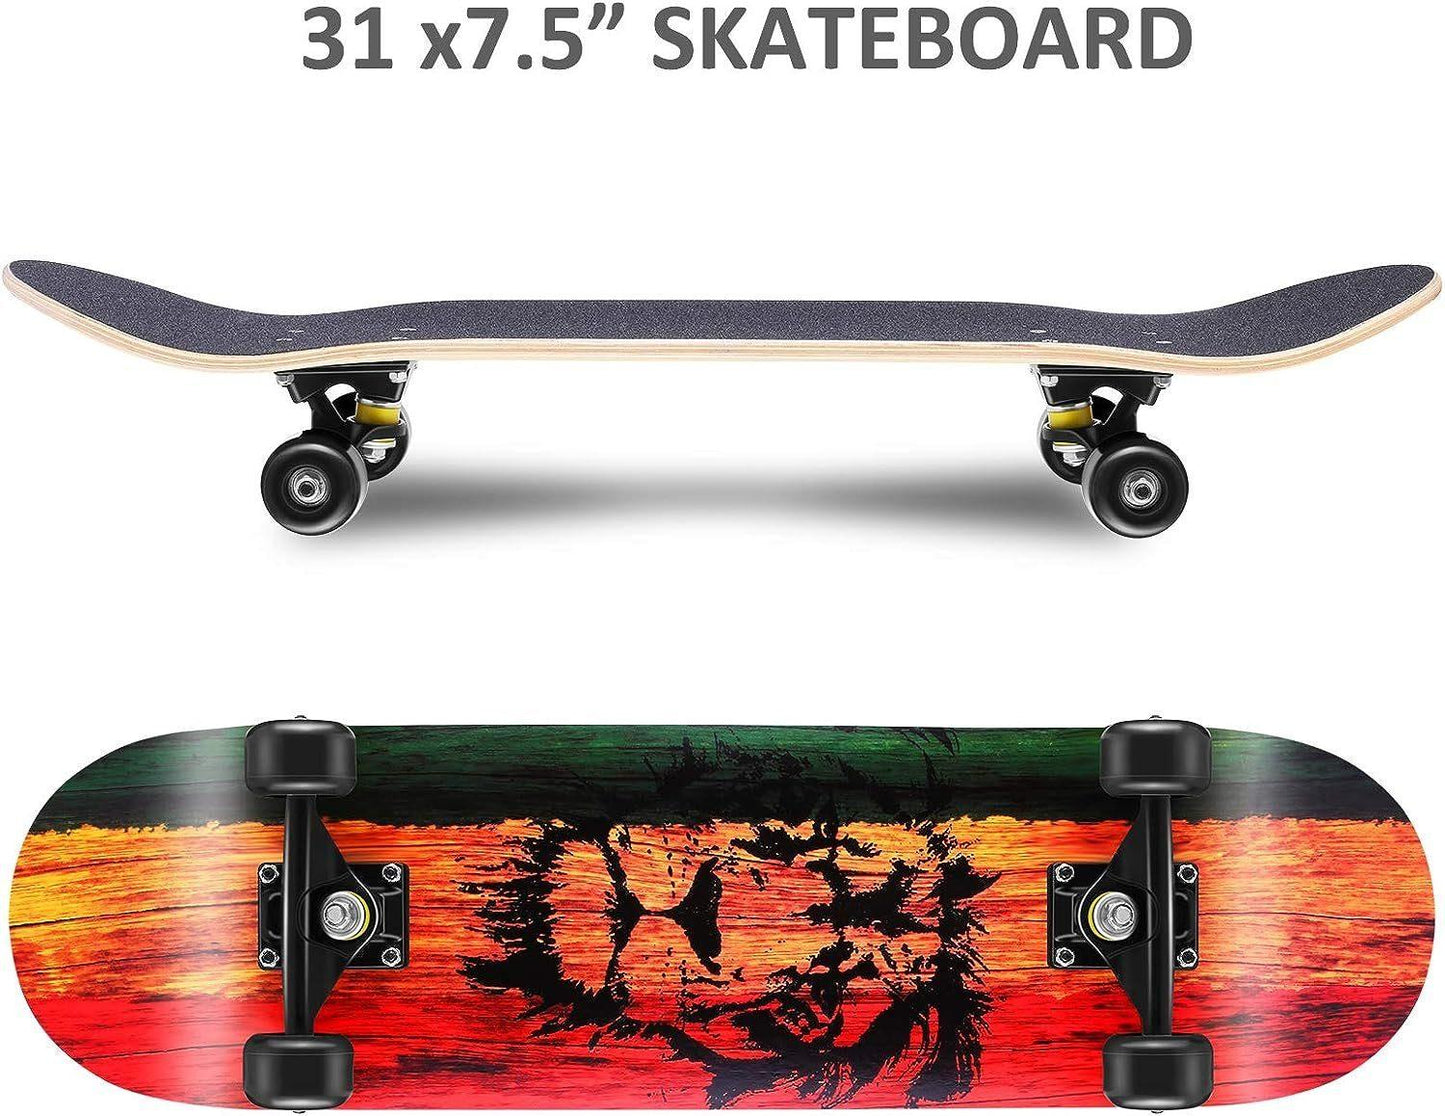 Weskate Skateboard - Lion-Orange